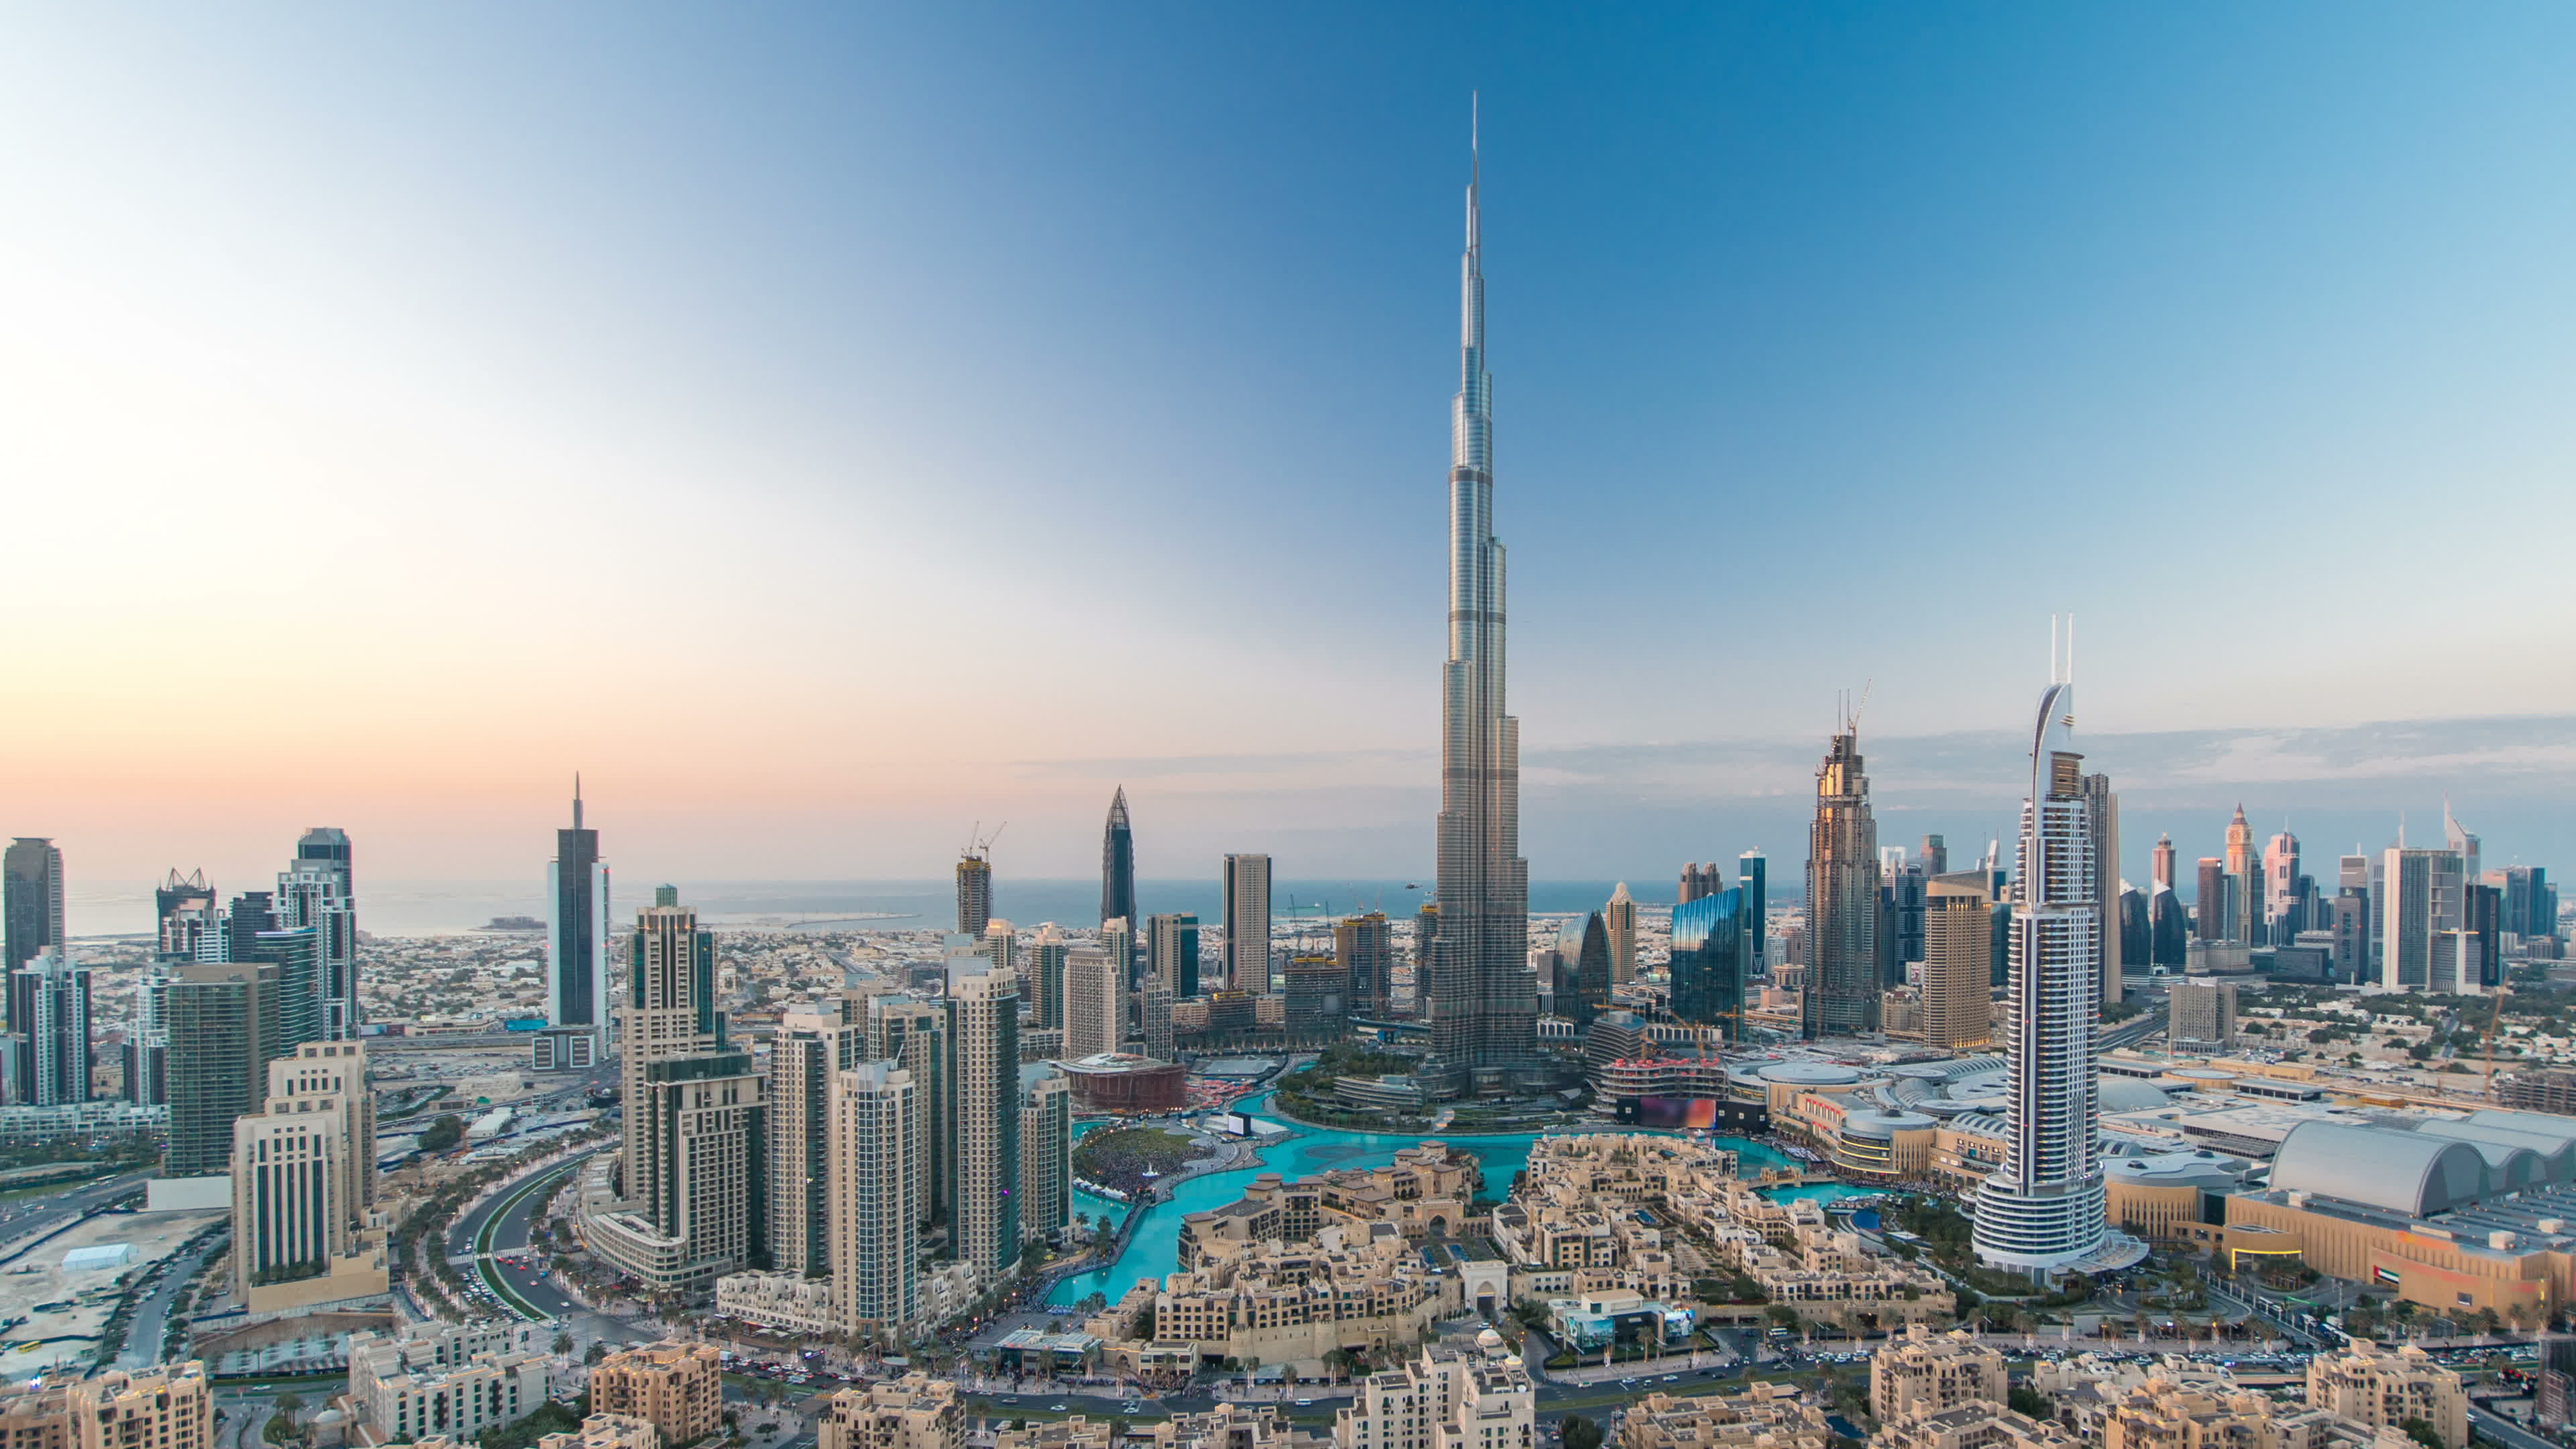 El skyline de Dubai, coronado por el Burj Khalifa, el edificio ms alto del mundo.